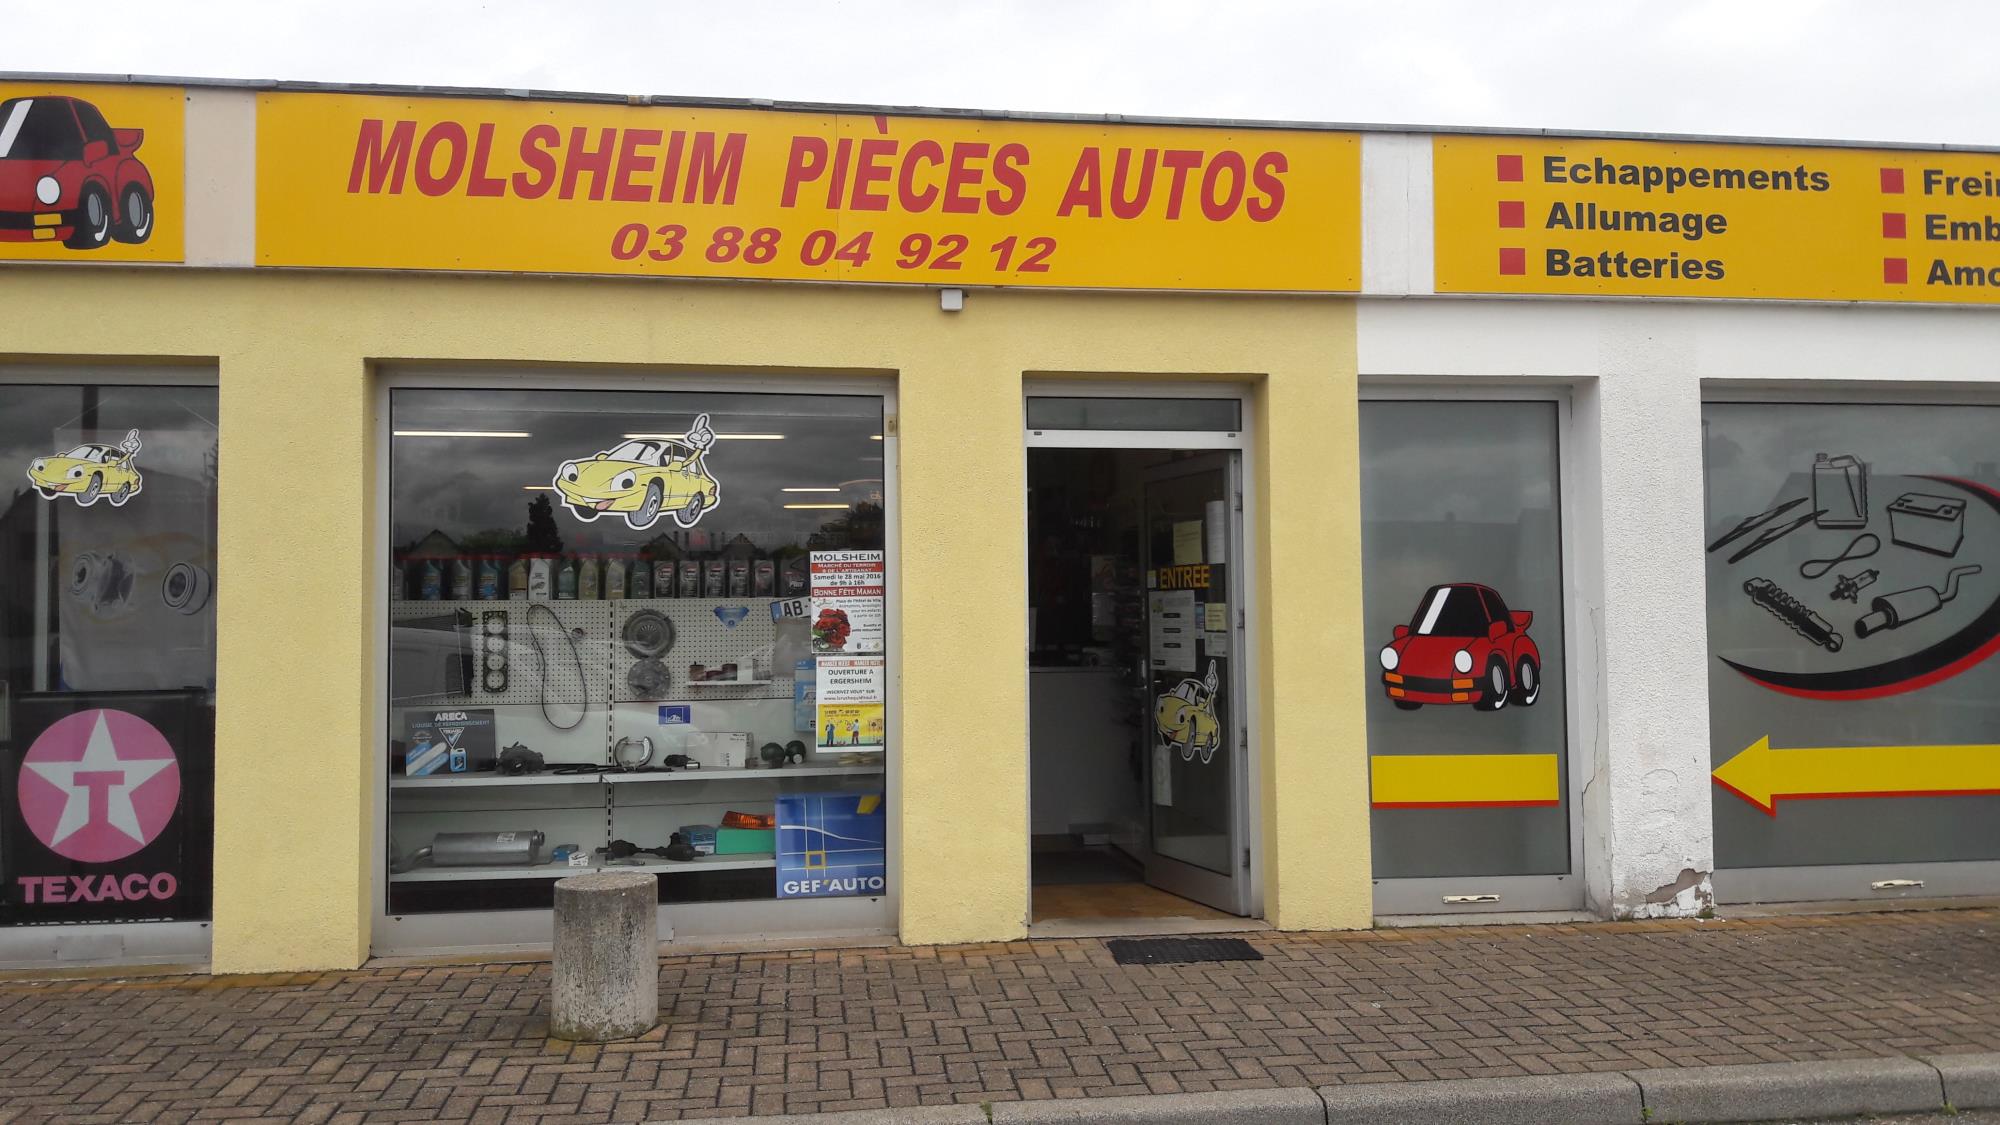 Molsheim Pieces Autos